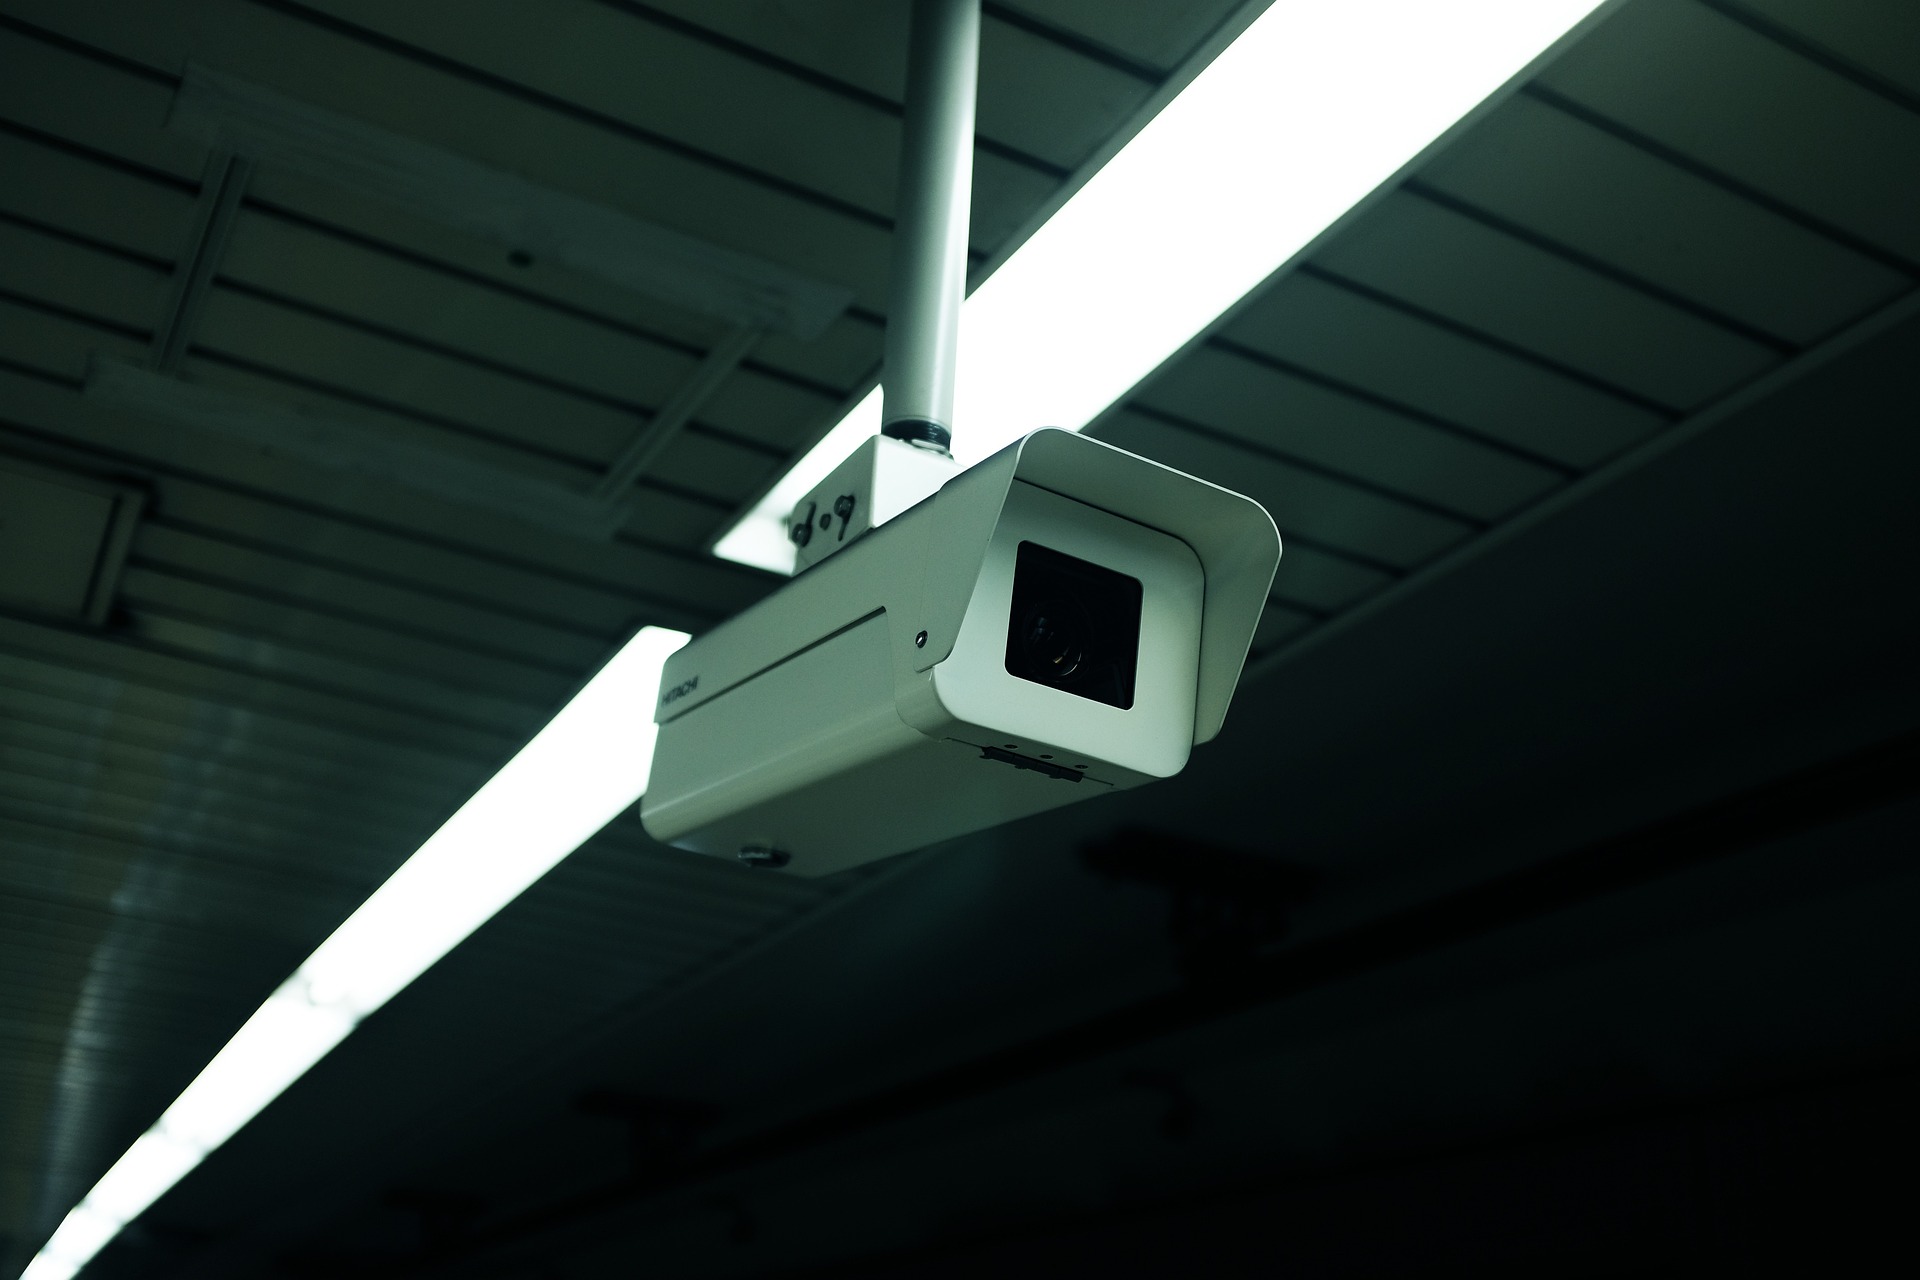 surveillance, camera, occupational safety, anparo